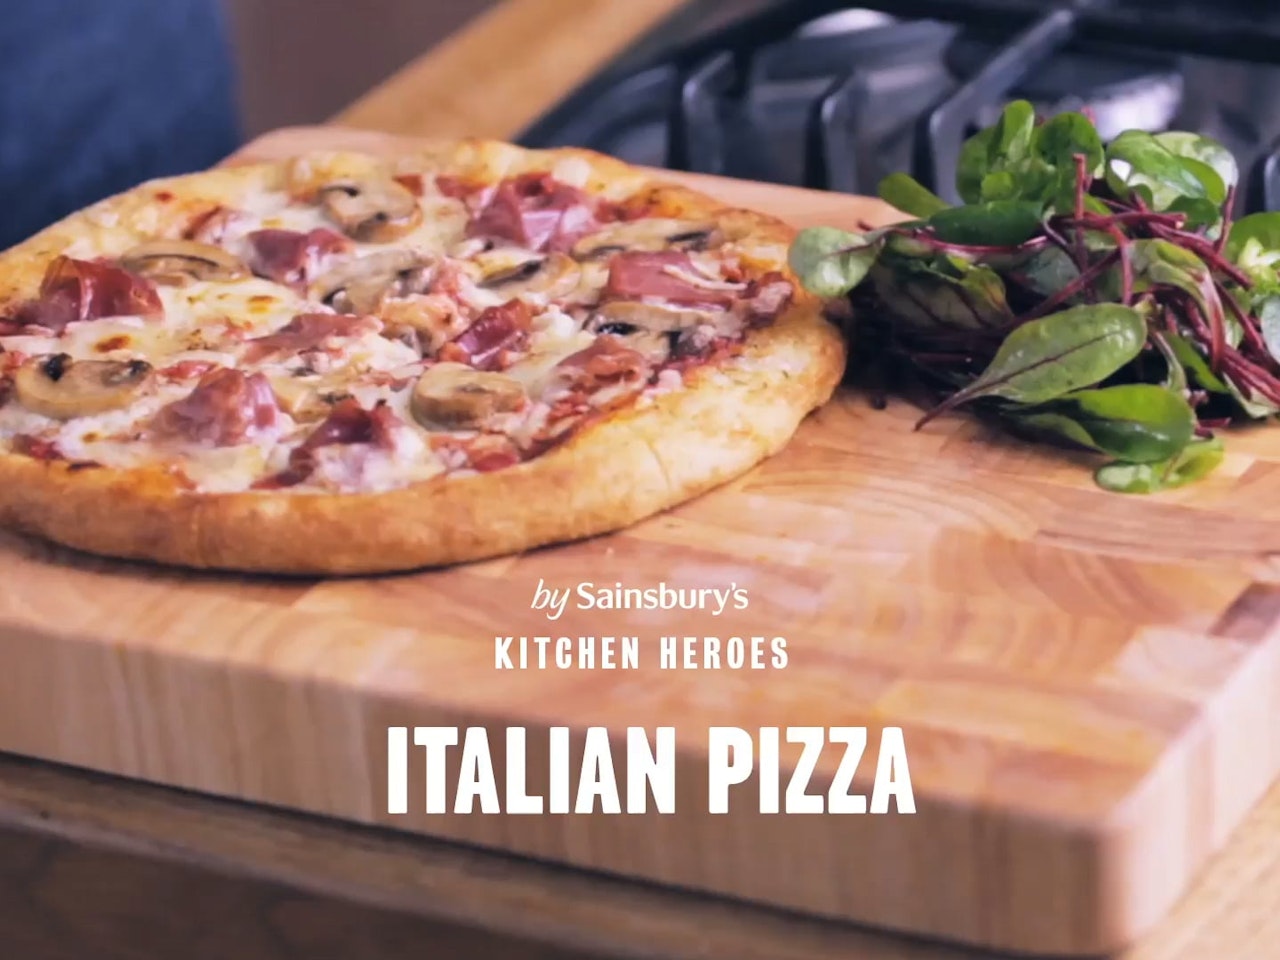 SAINSBURY'S: 'ITALIAN PIZZA'